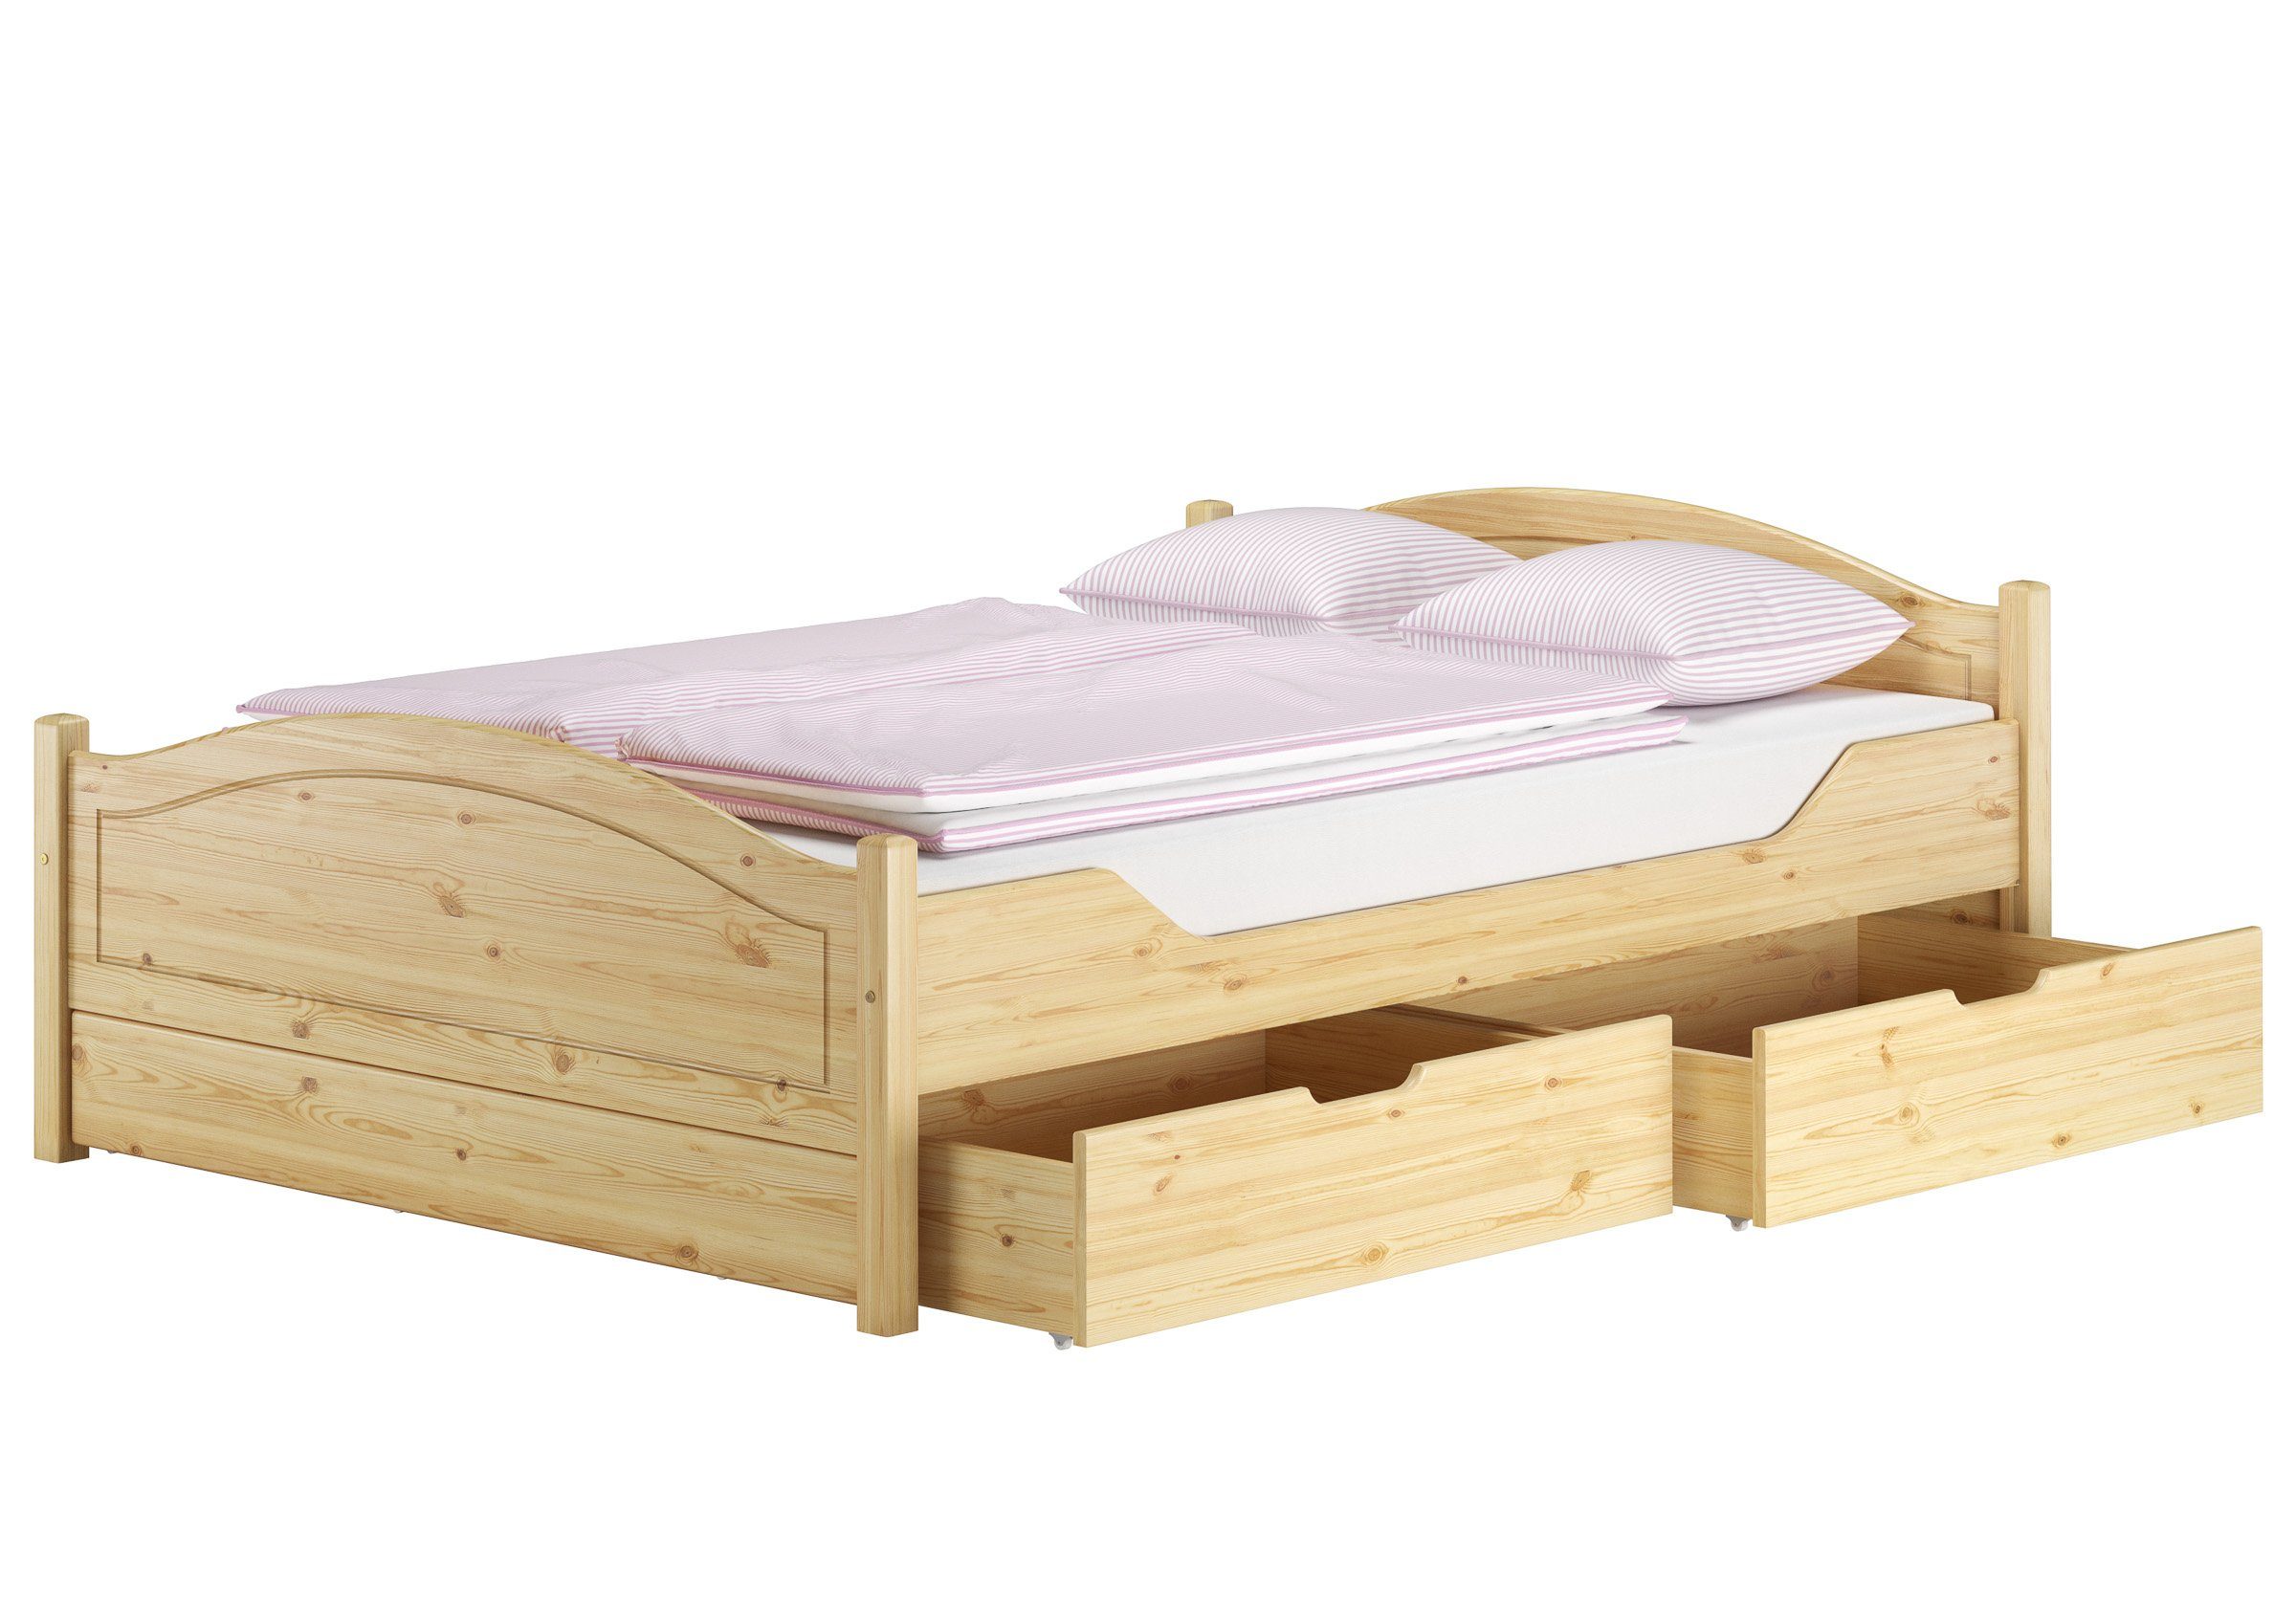 Staukasten, Bett lackiert mit 140x200 ERST-HOLZ Doppelbett Komplettset Kieferfarblos Bett